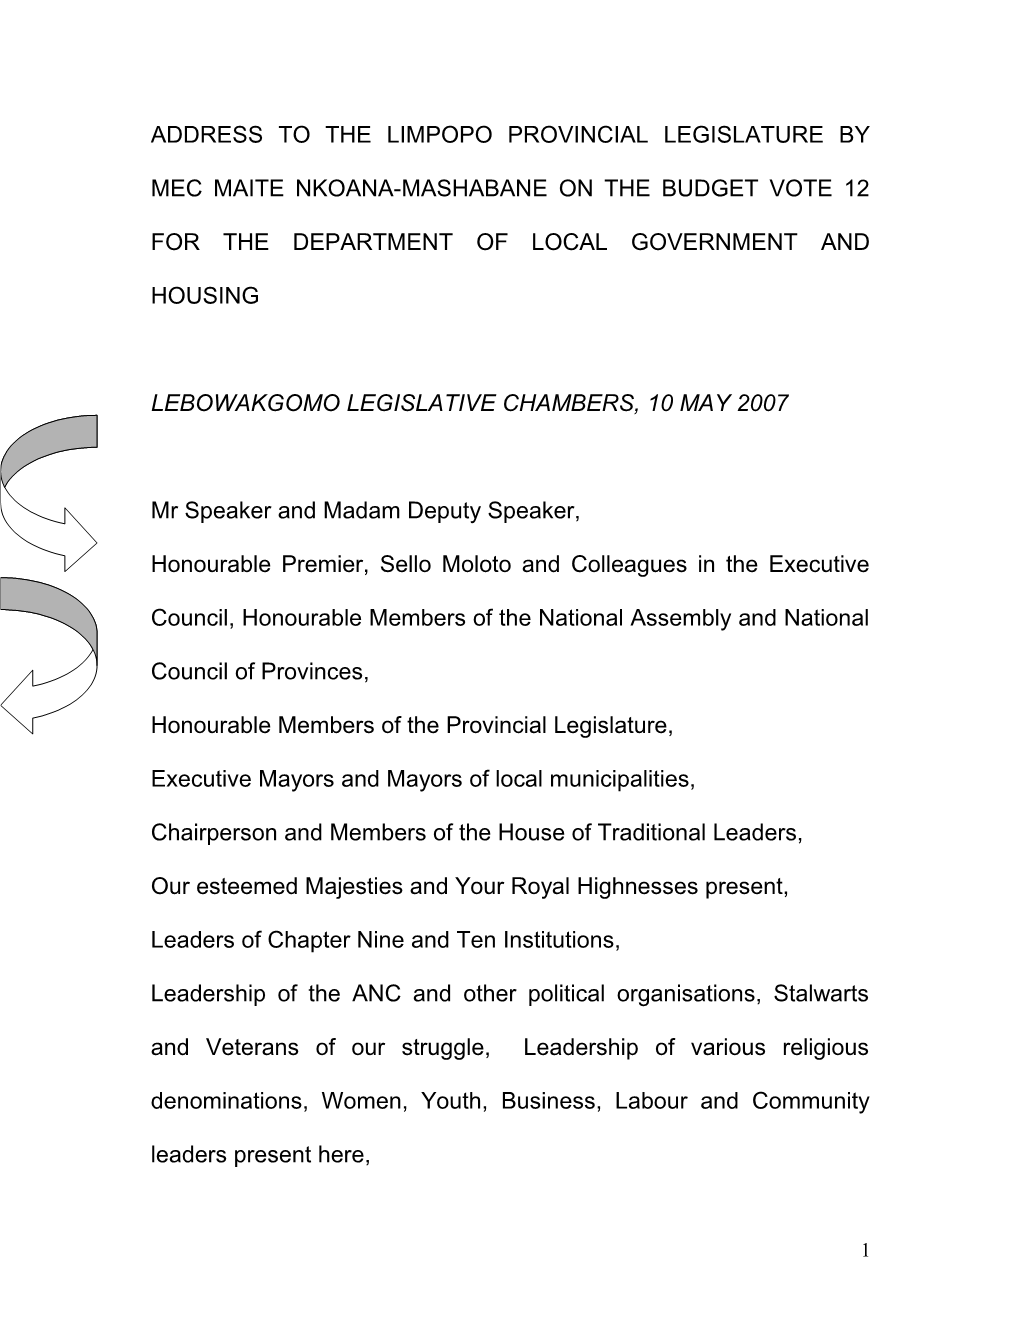 Address to the Limpopo Provincial Legislature by Mec Maite Nkoana-Mashsbane on the Budget